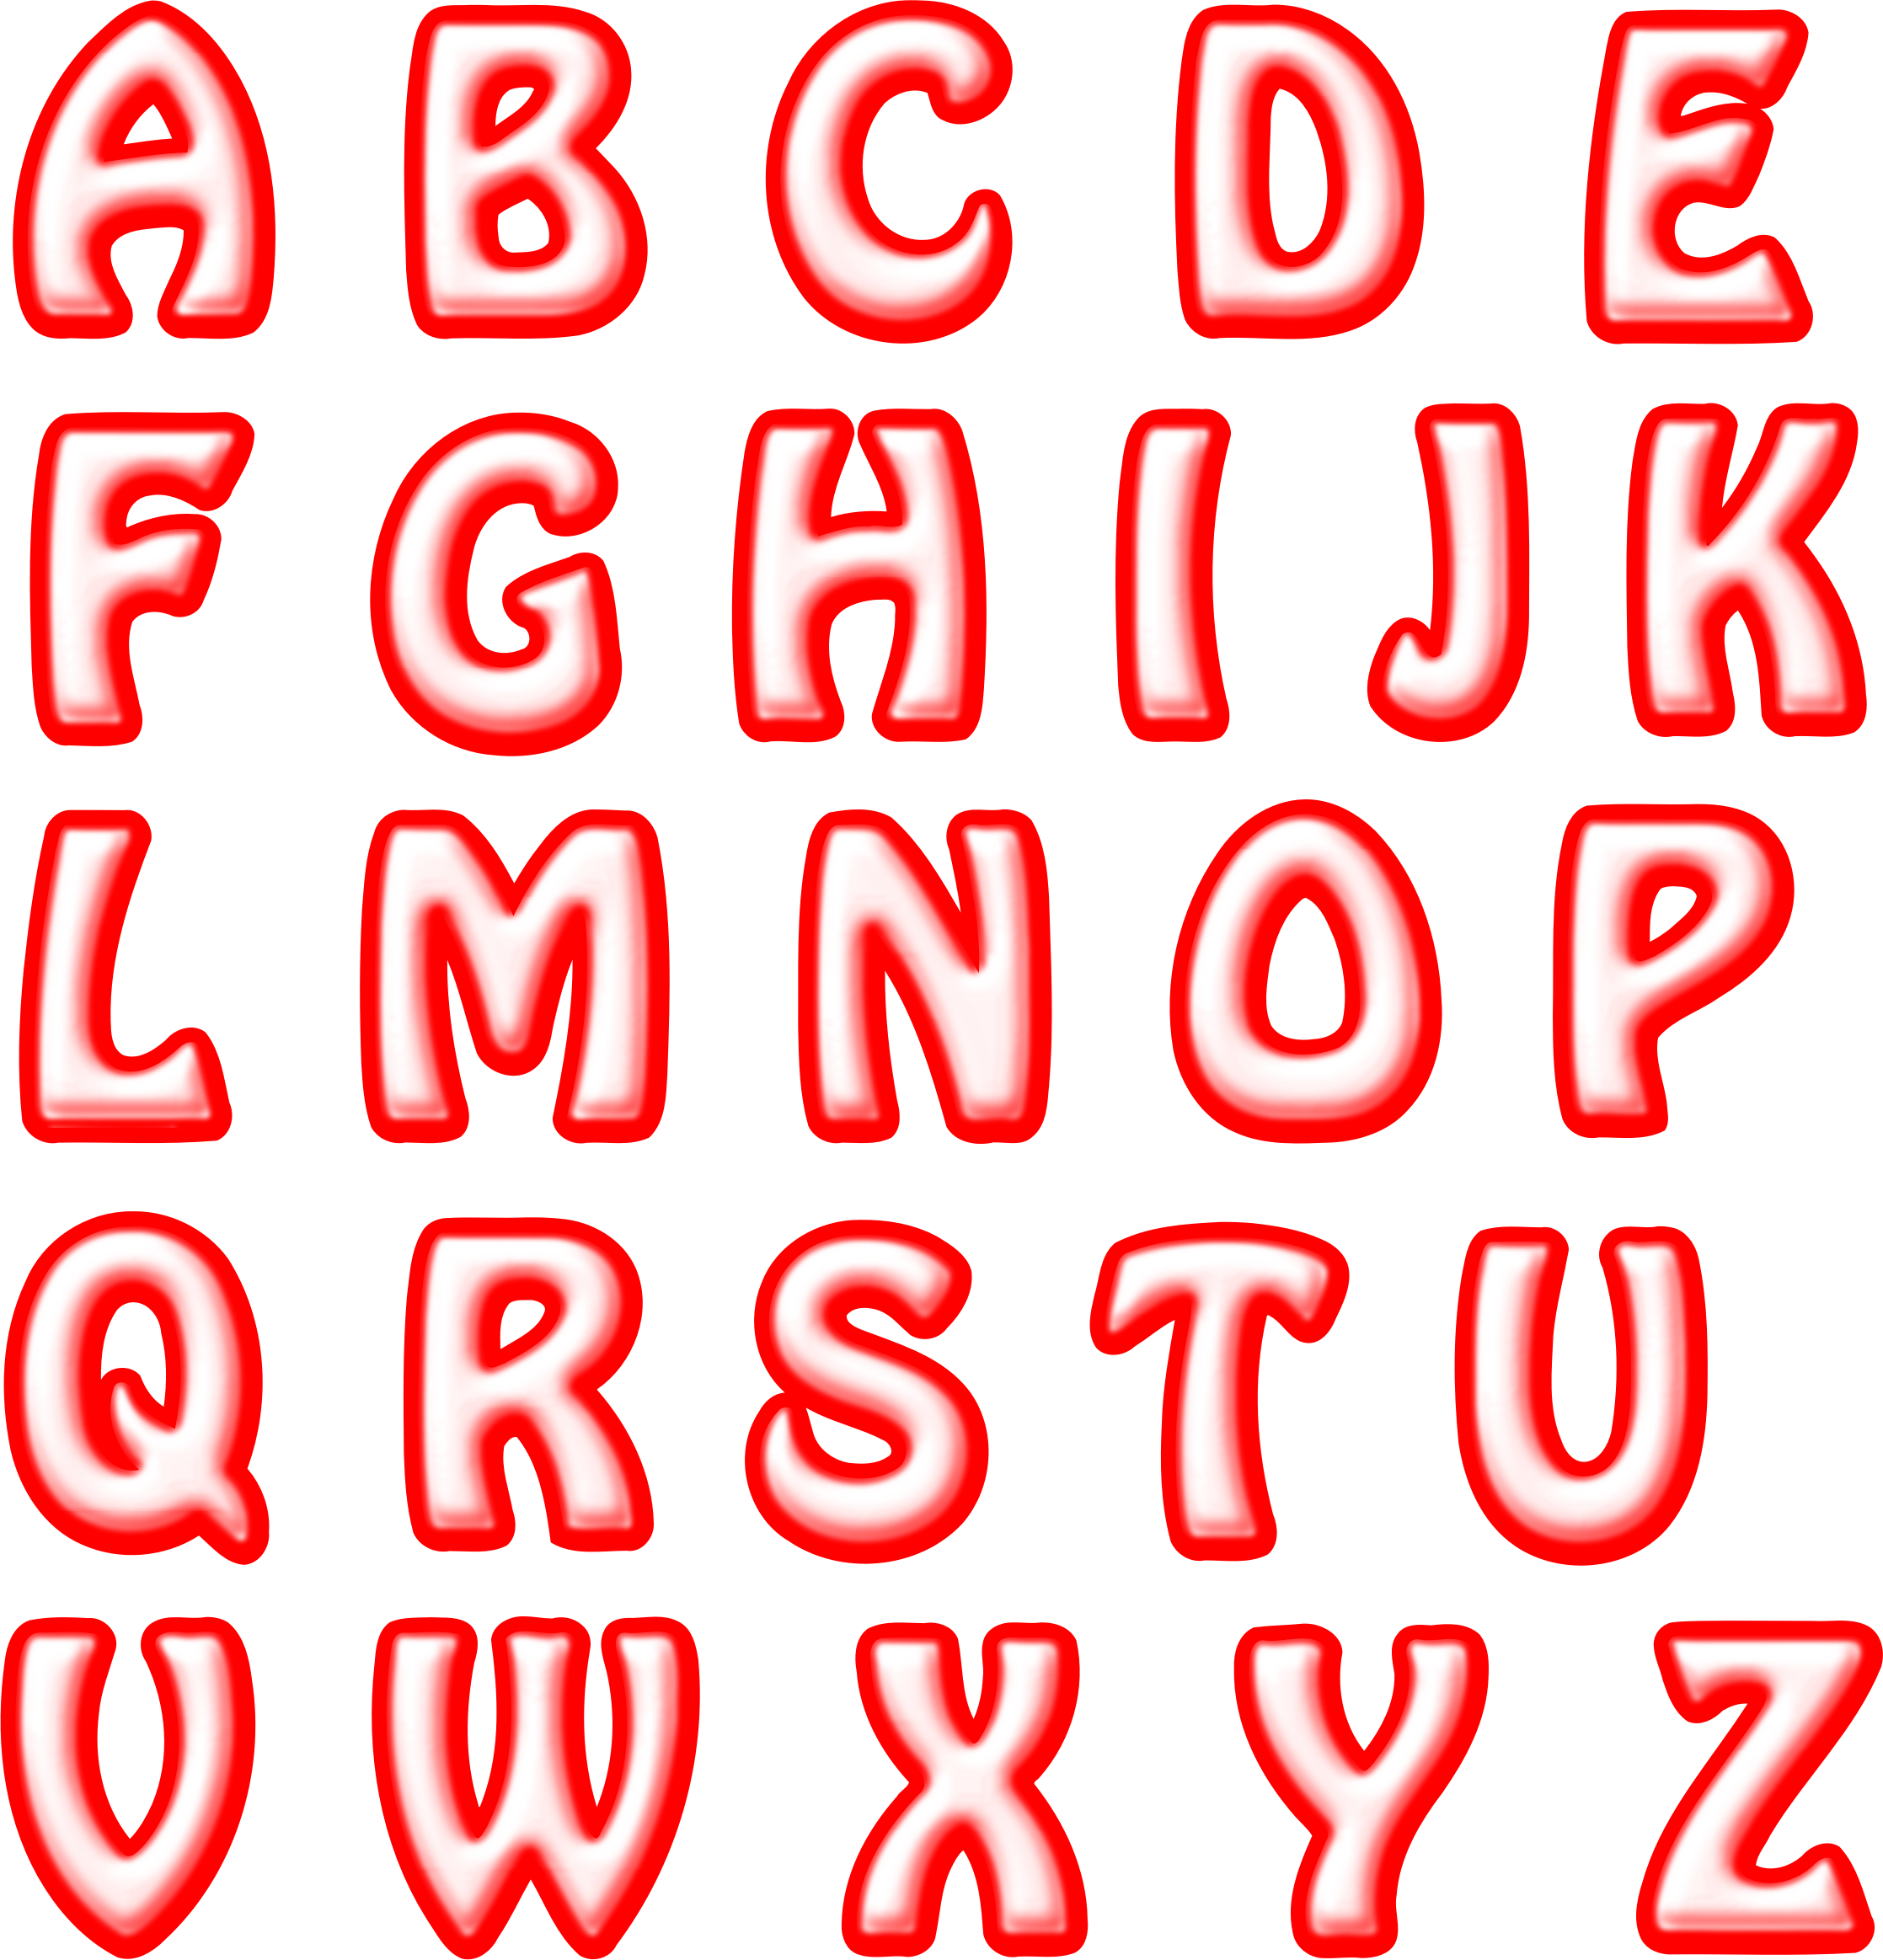 red letter n clip art